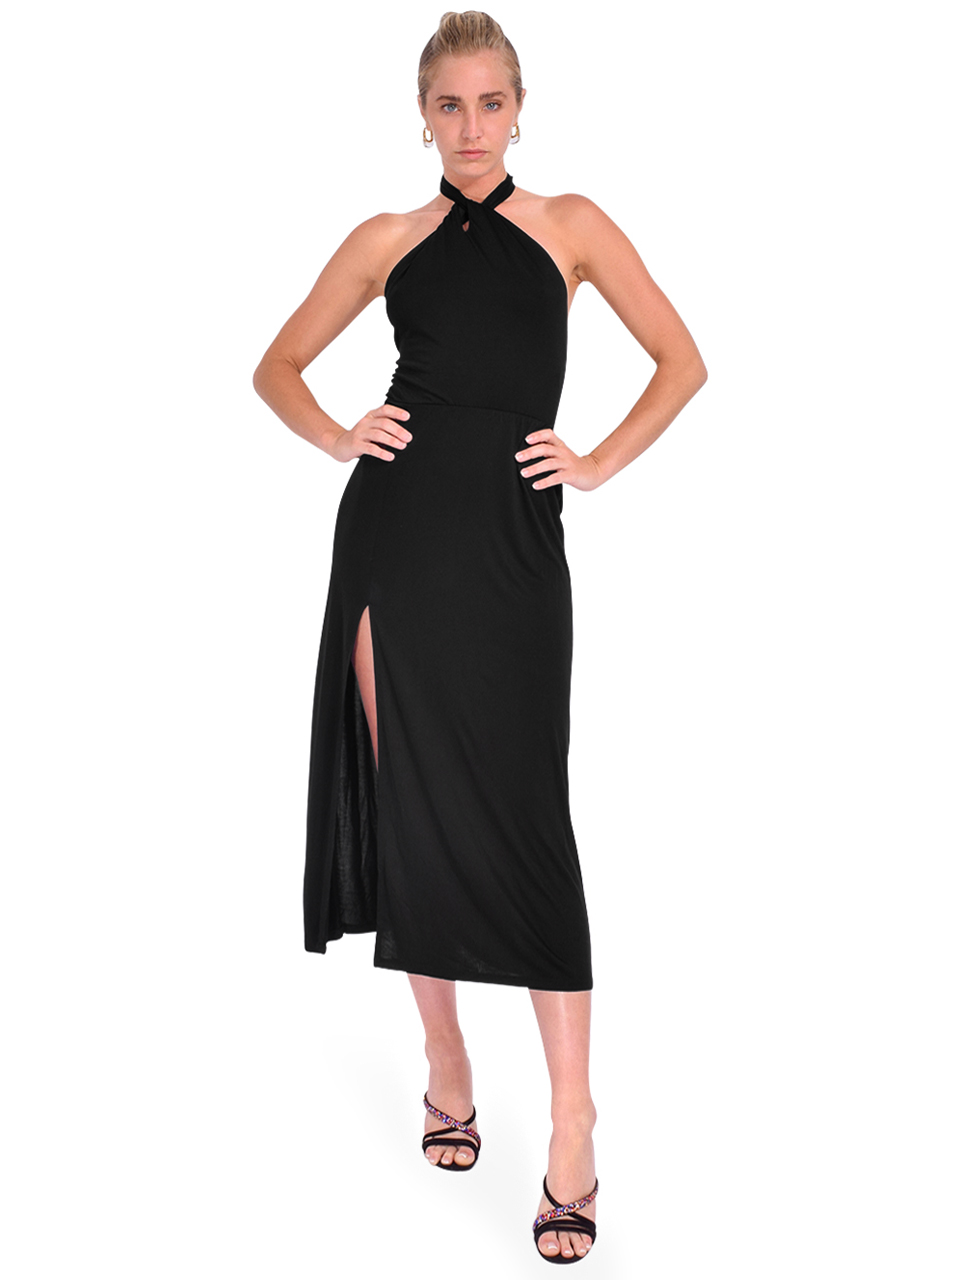 LBLC The Label Elise Halter Dress in Black Front View 2